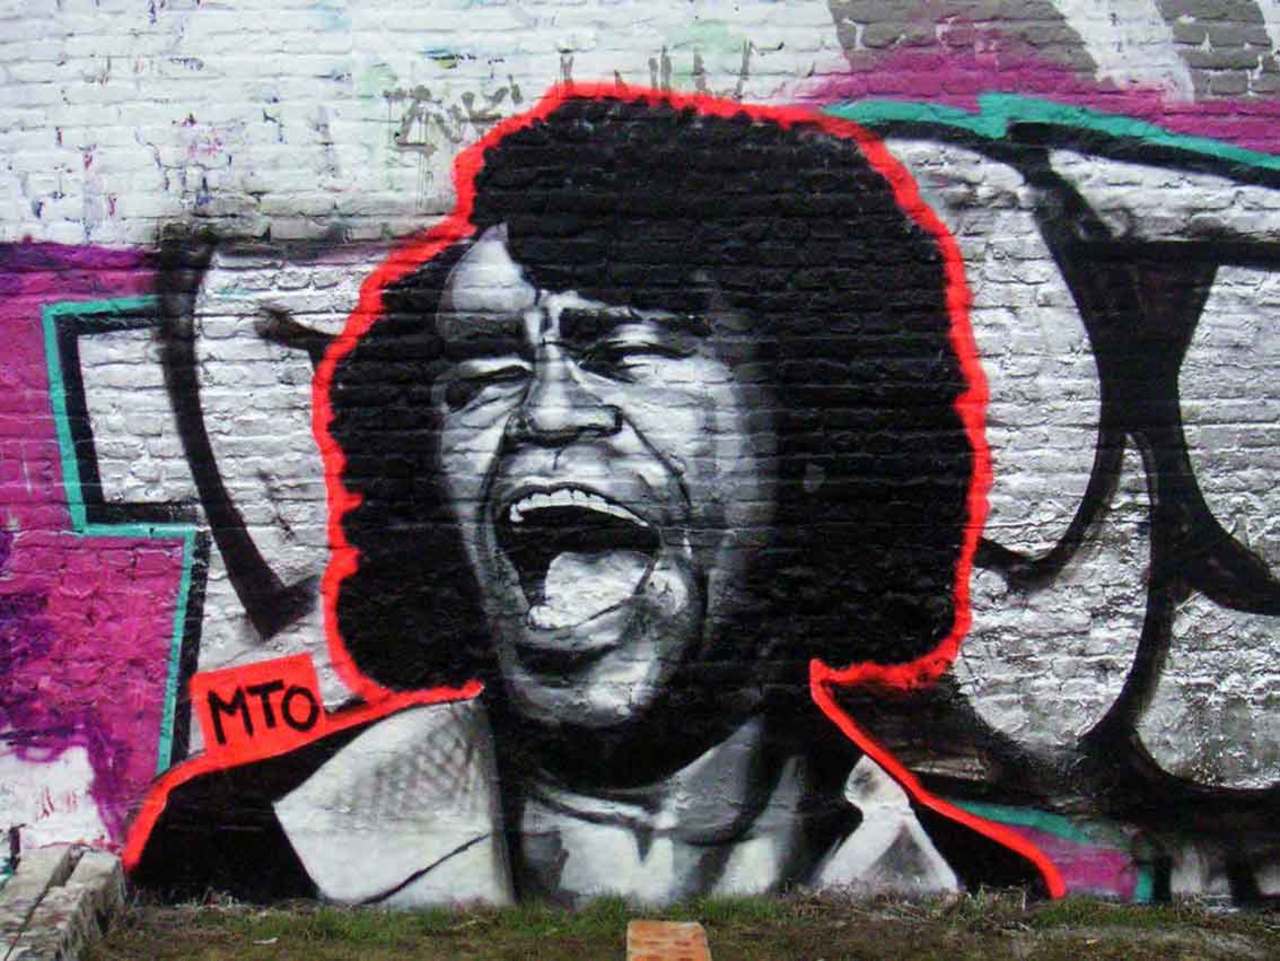 'James Brown' #Graffiti Art by MTO #Mural #StreetArt #Berlin #Germany https://t.co/DIKUpQmxjM